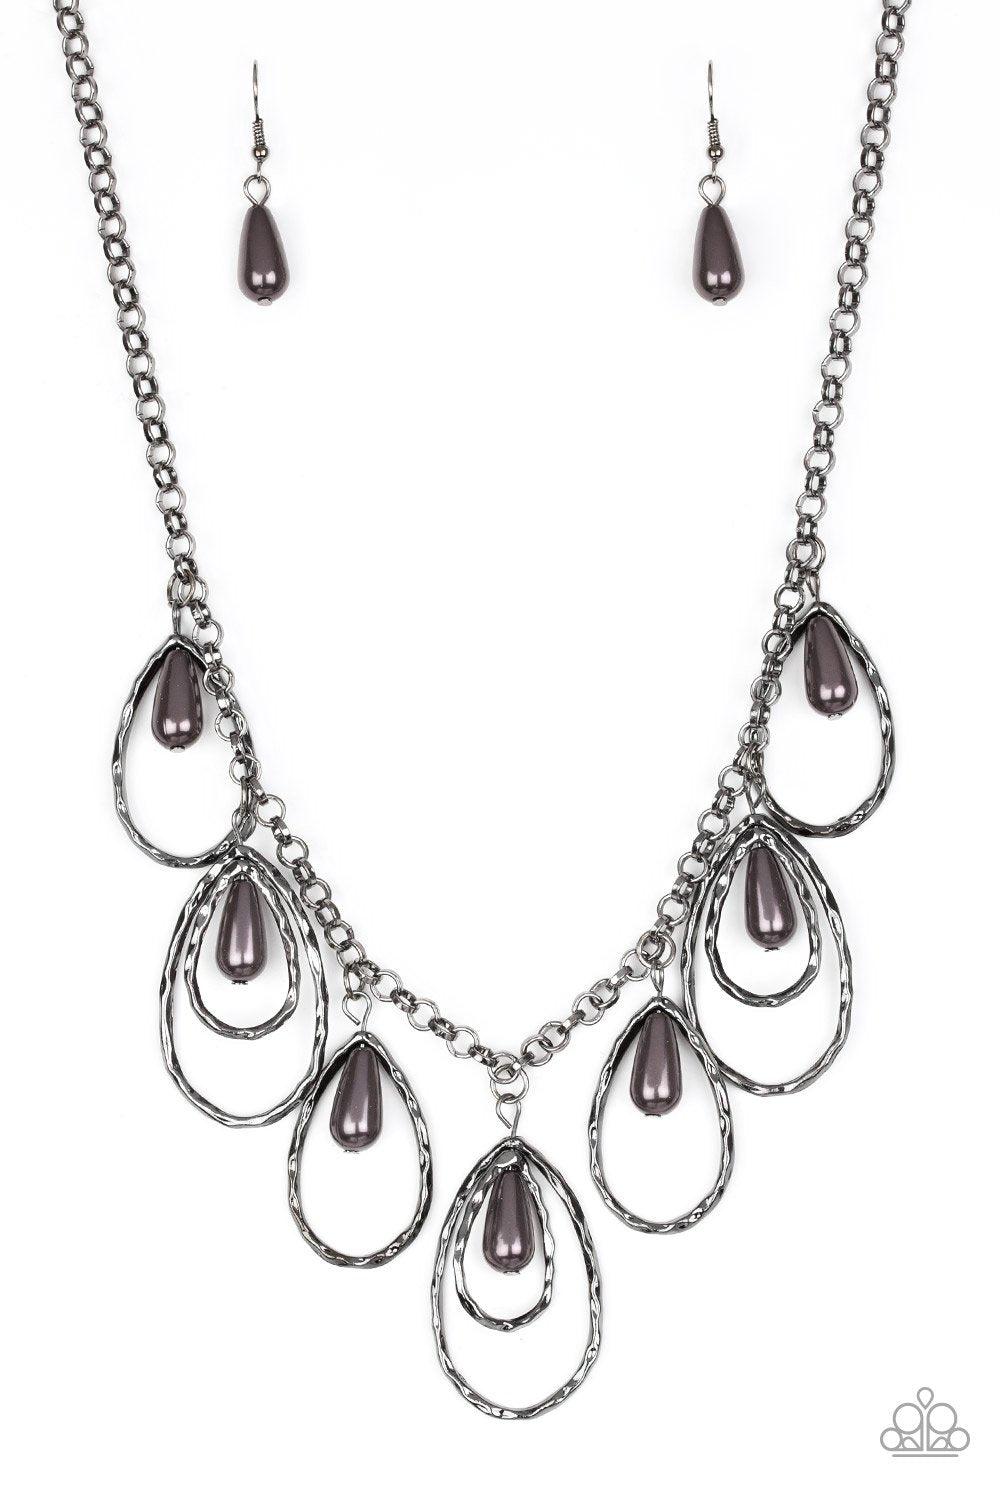 Rustic Ritz Black Gunmetal Necklace - Paparazzi Accessories-CarasShop.com - $5 Jewelry by Cara Jewels